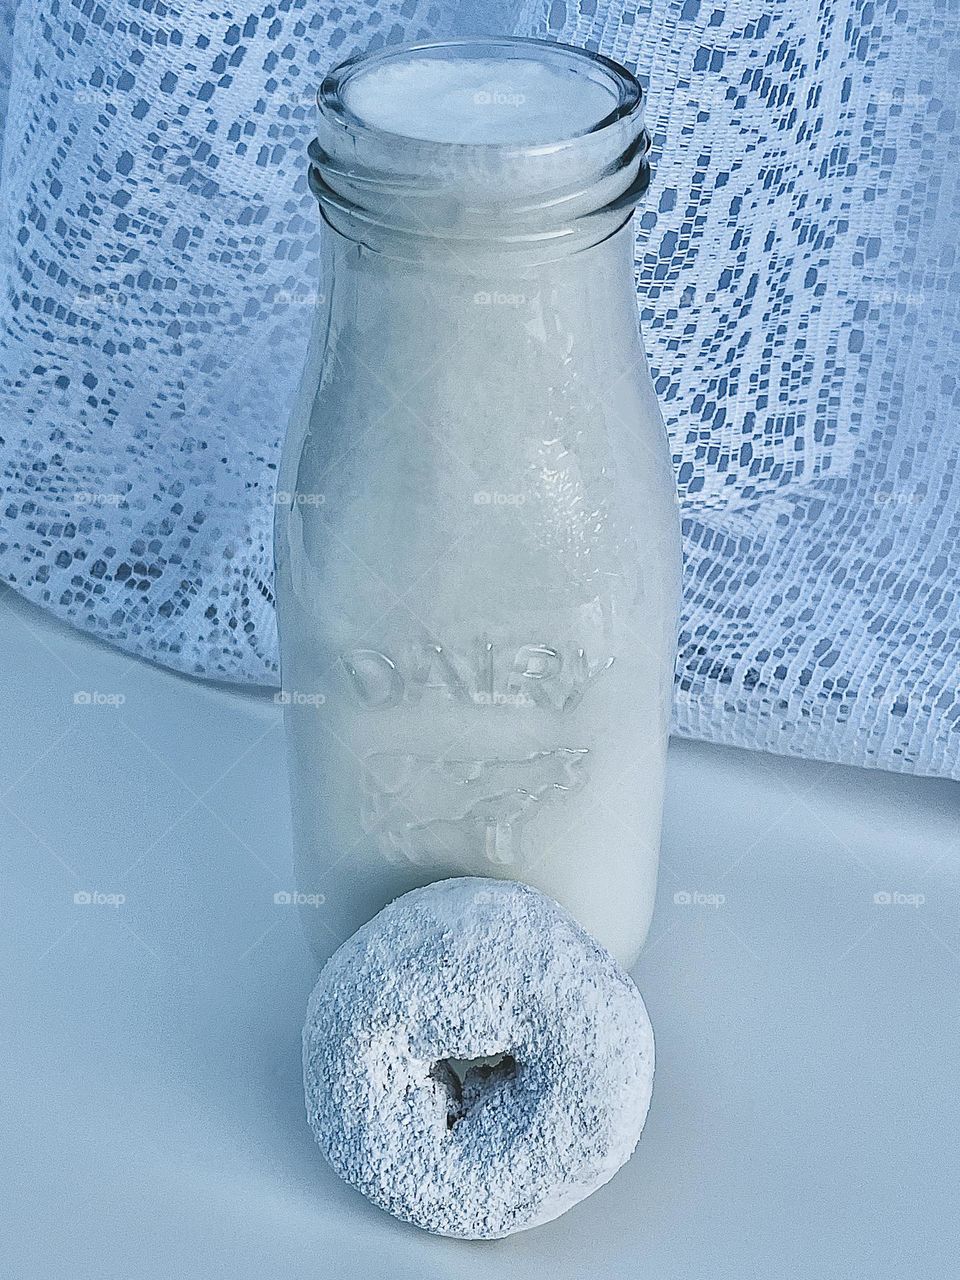 One White Powdered Donut and Milk